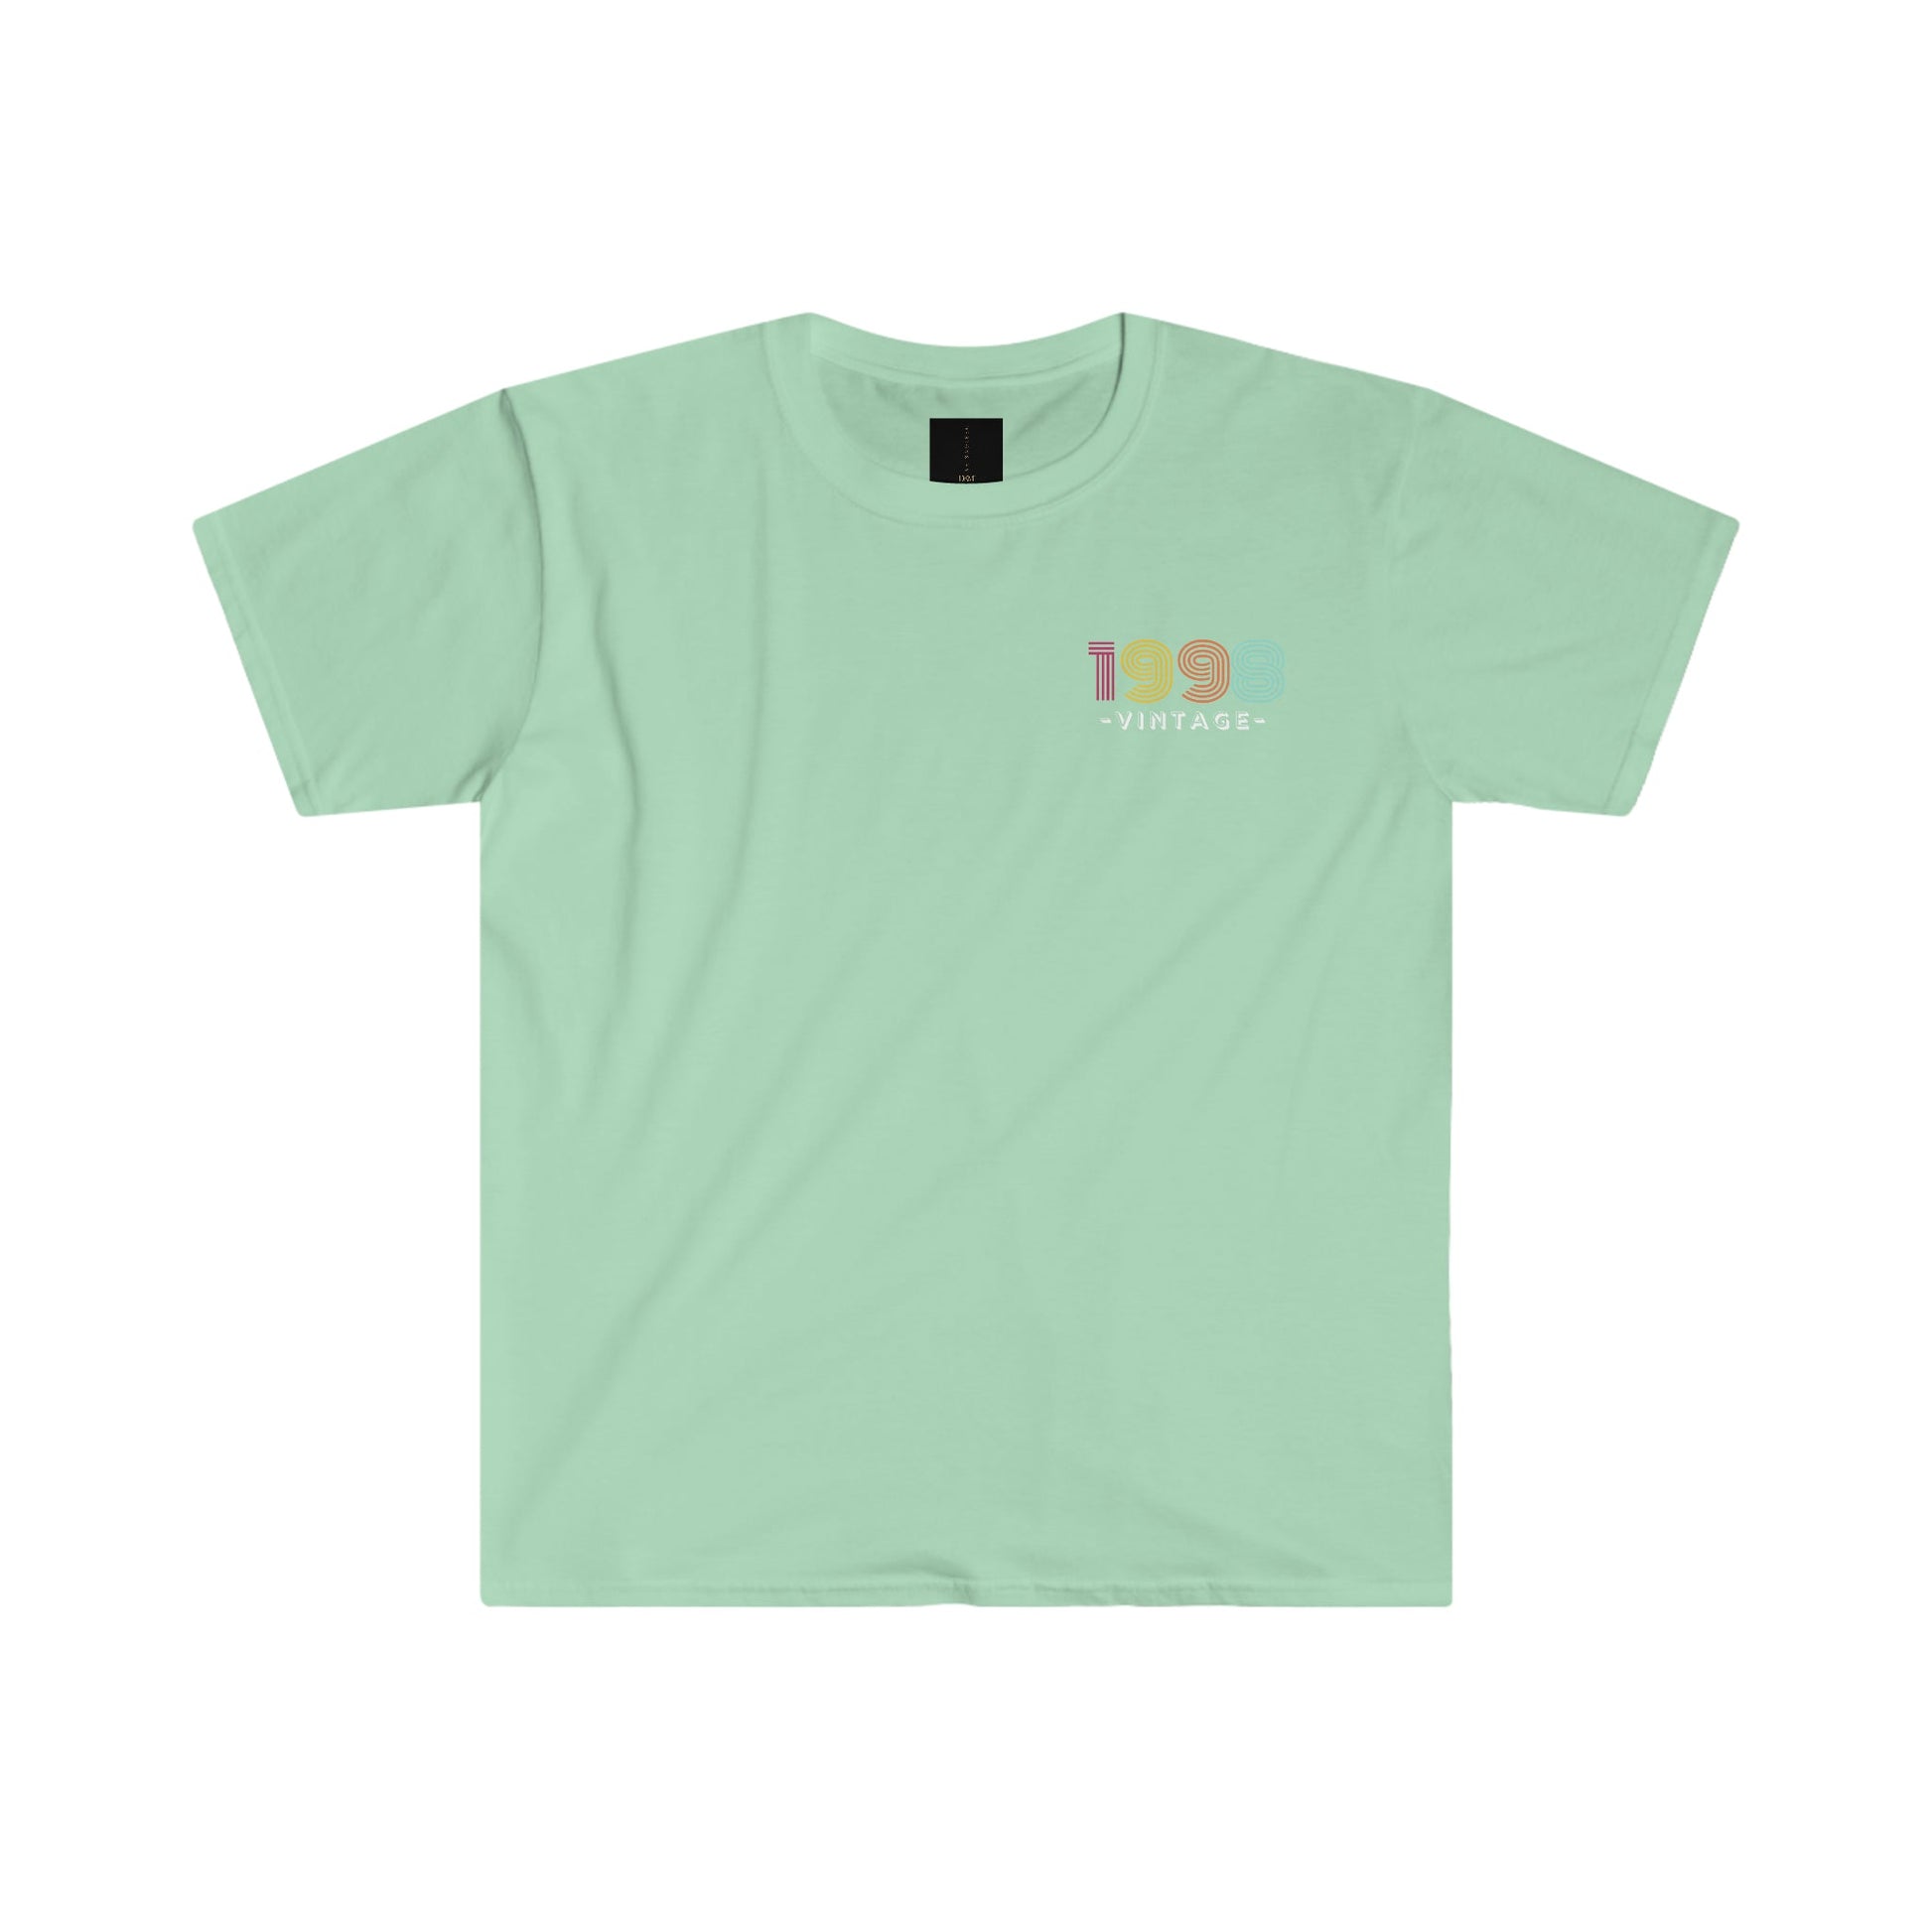 1998 Vintage, Unisex T-Shirt - Designs by DKMc